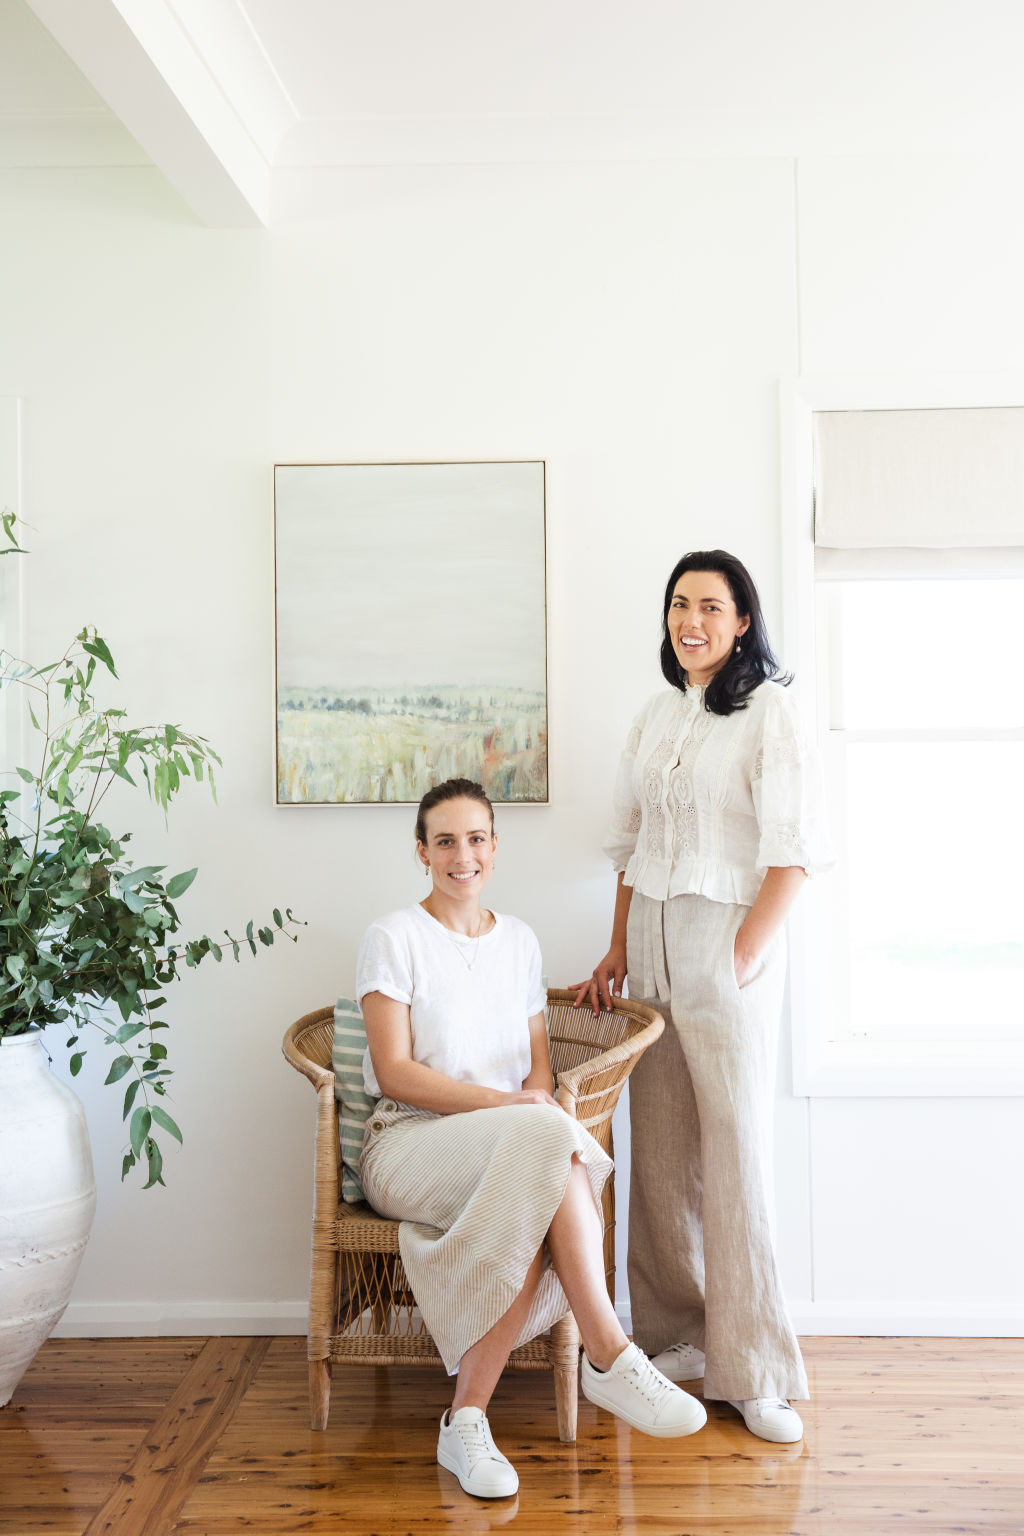 Katrina Garrett and Millie Alison, founders of Australian interior design and decorating company The Design Paddock.